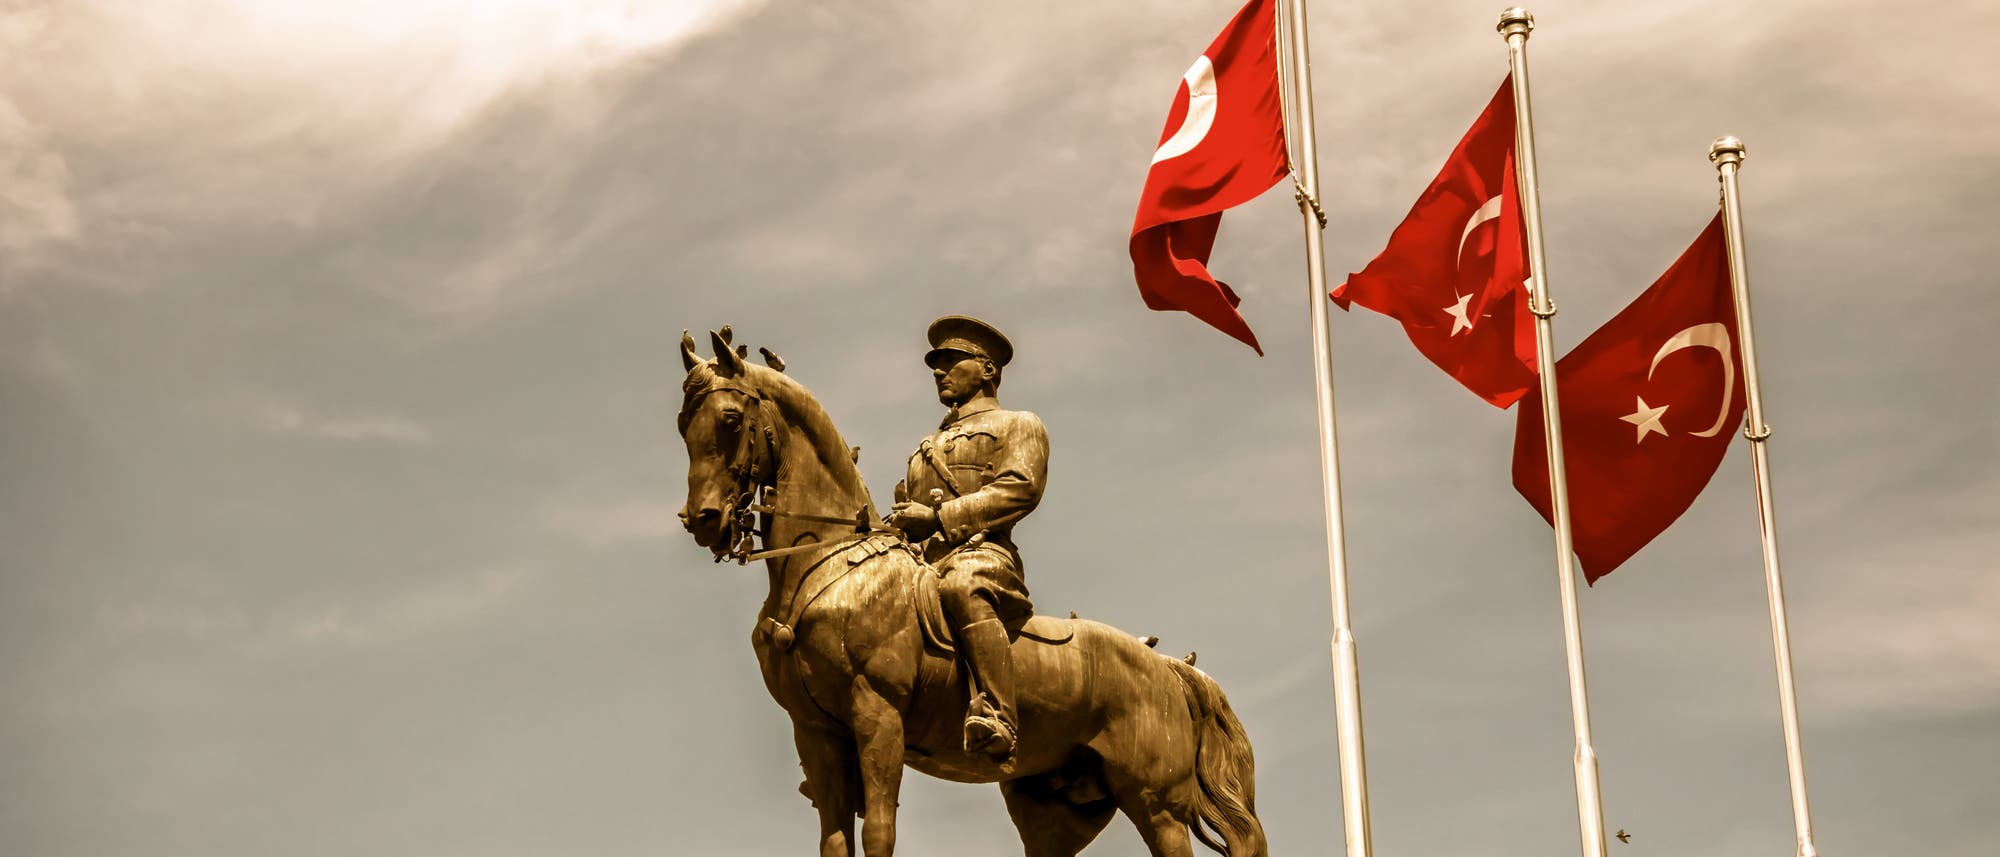 Statue von Mustafa Kemal Atatürk in Ulus, Ankara